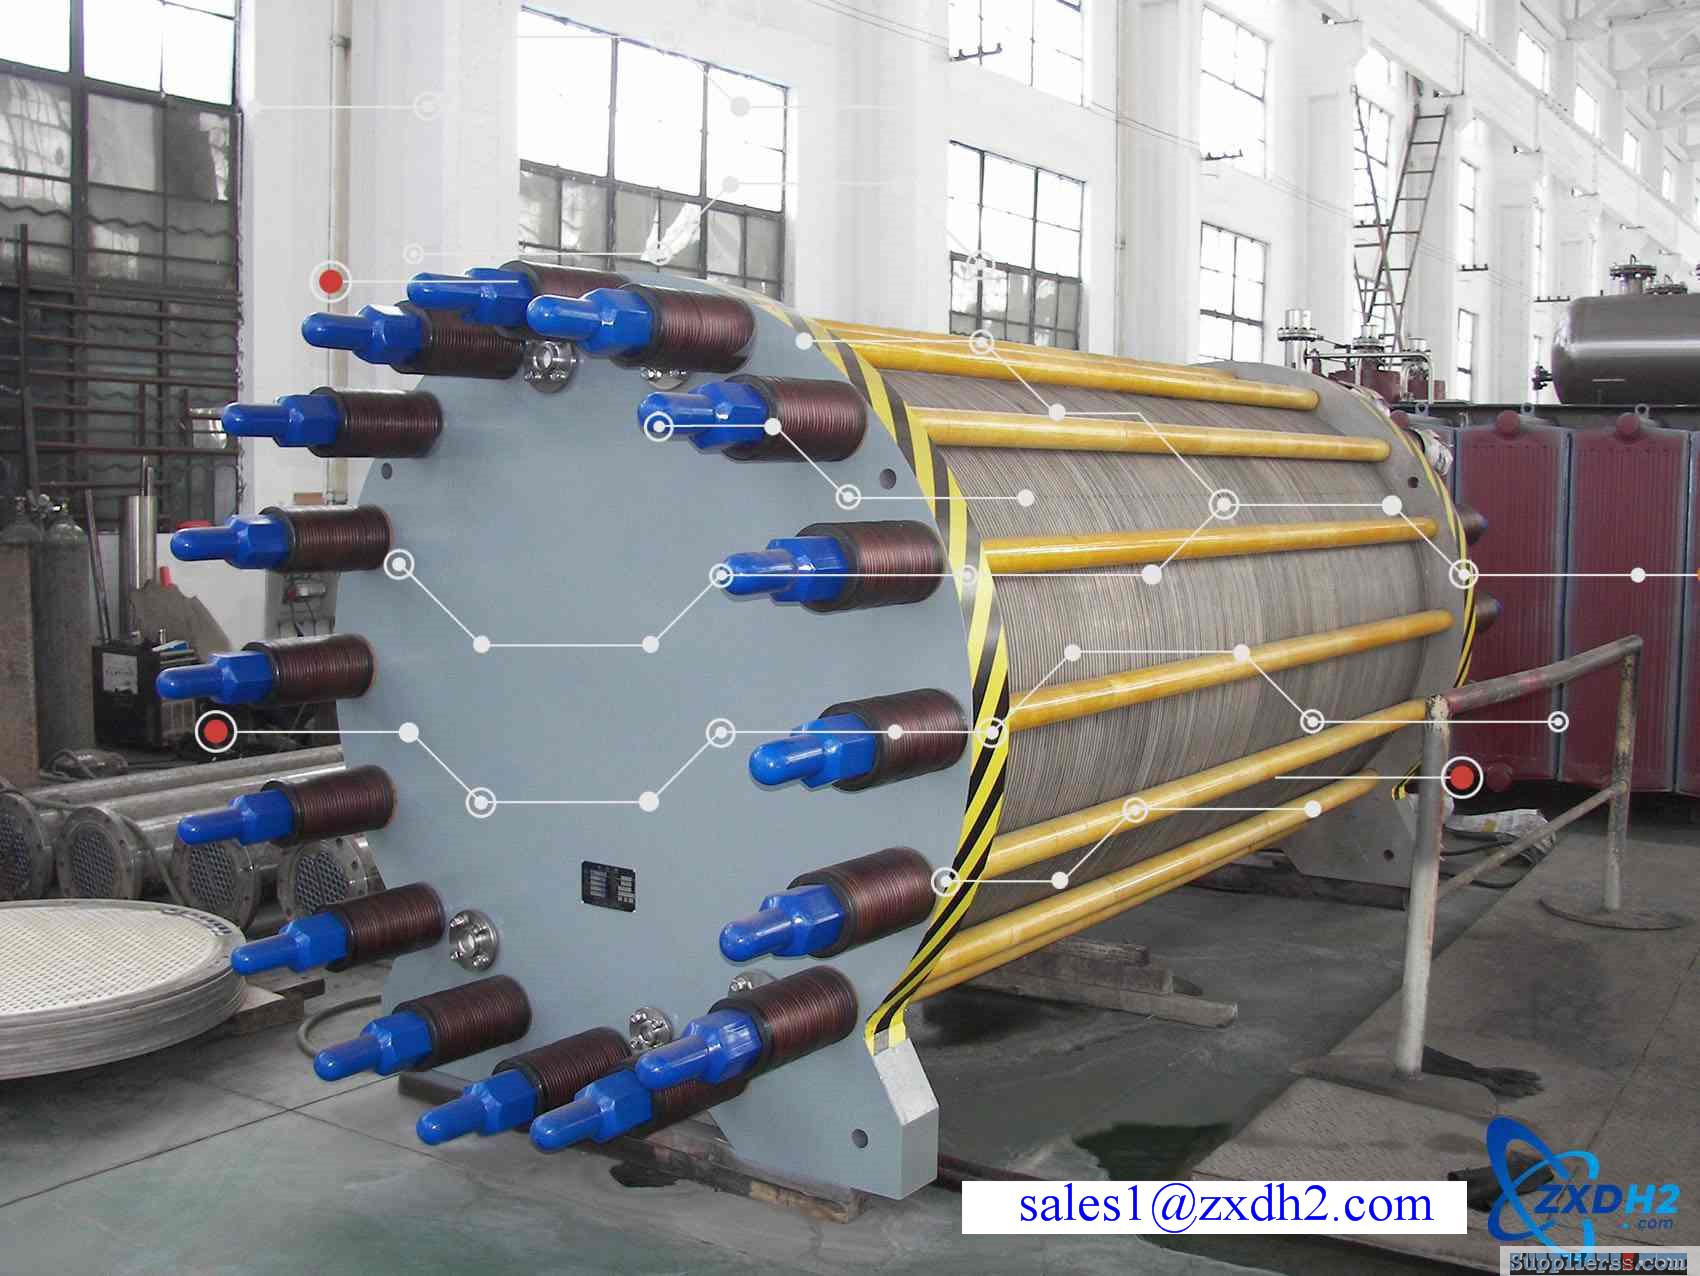 Large scale hydrogen generator / alkaline water electrolysis equipment